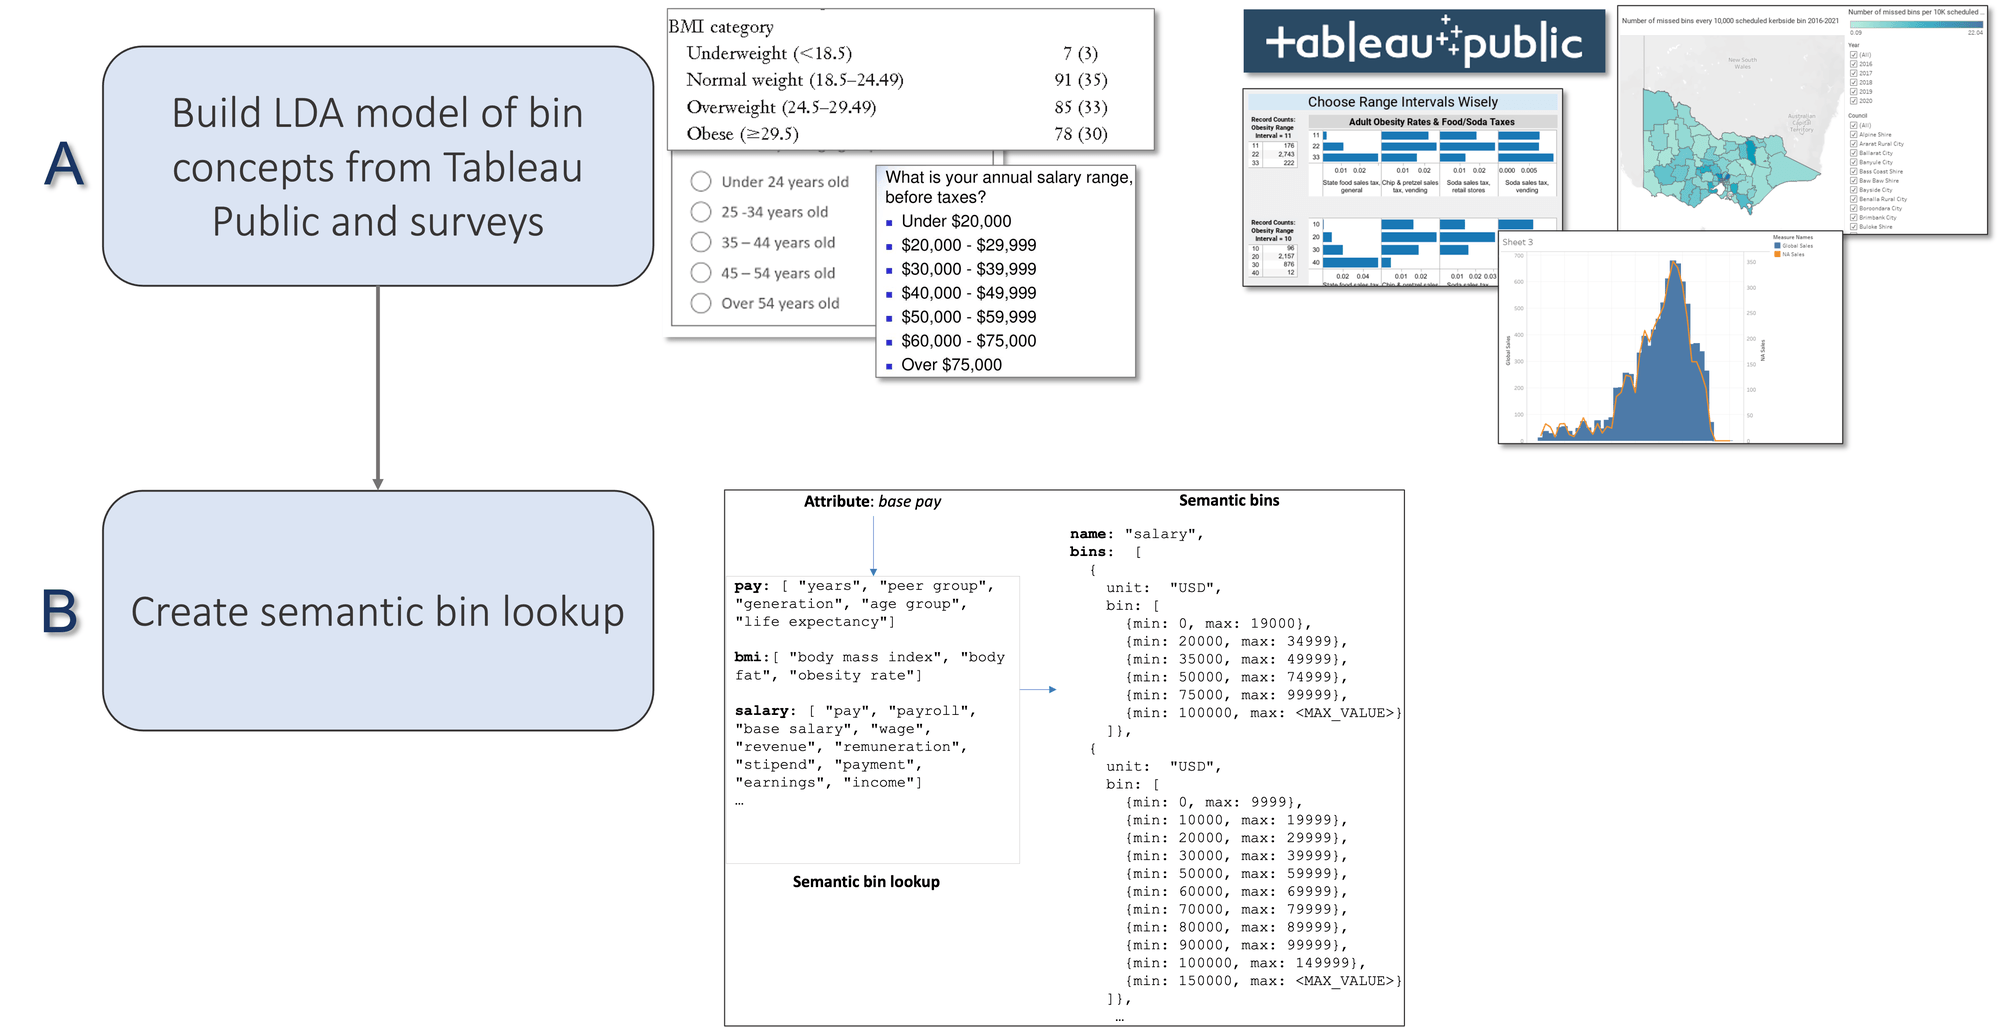 Construction of the semantic bin lookup table.